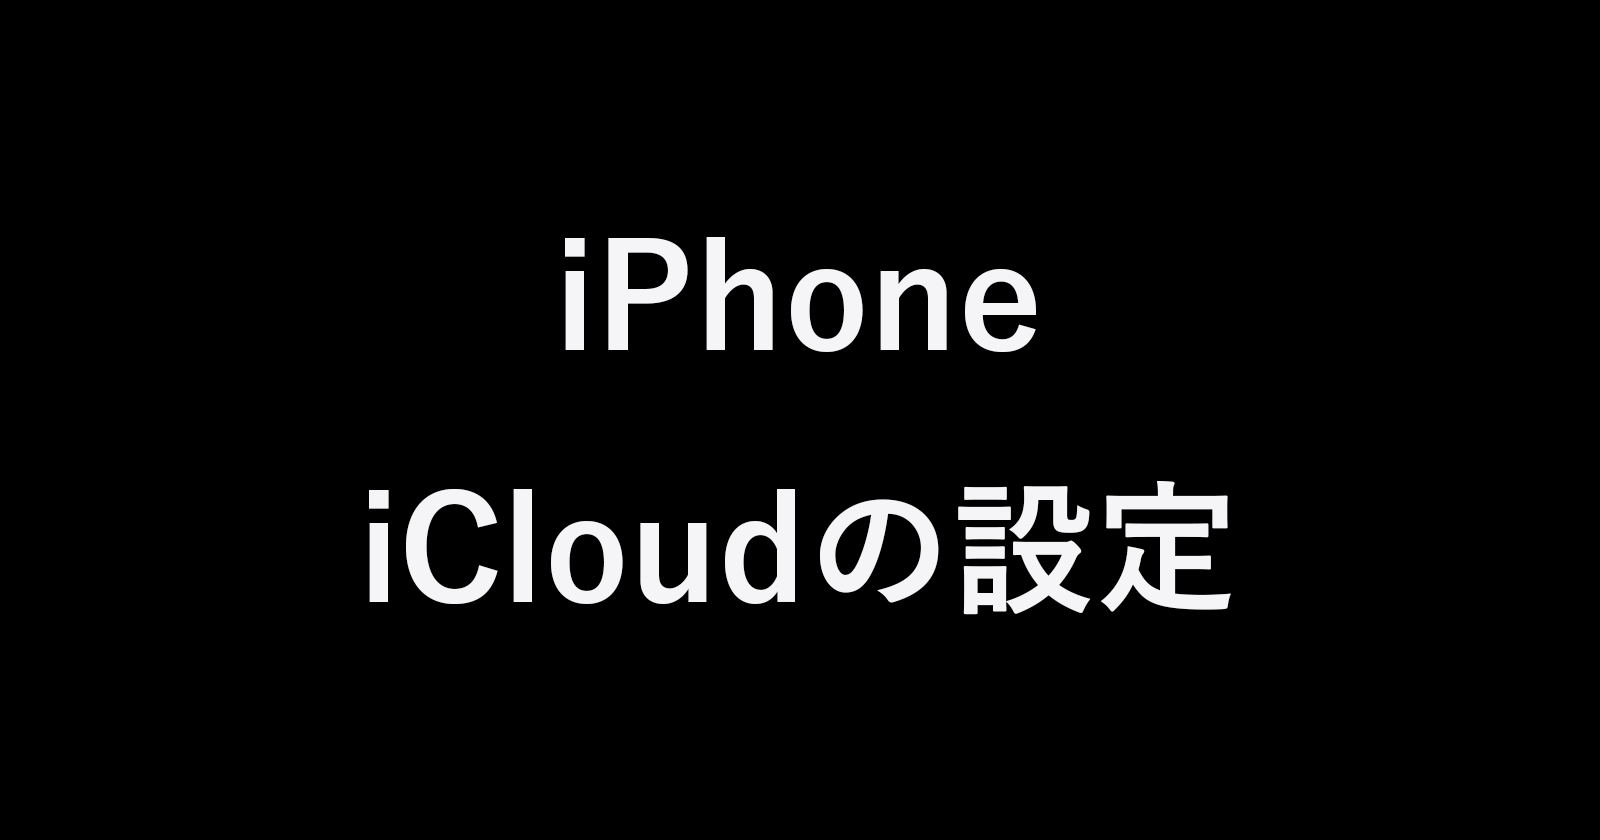 iphone icloud